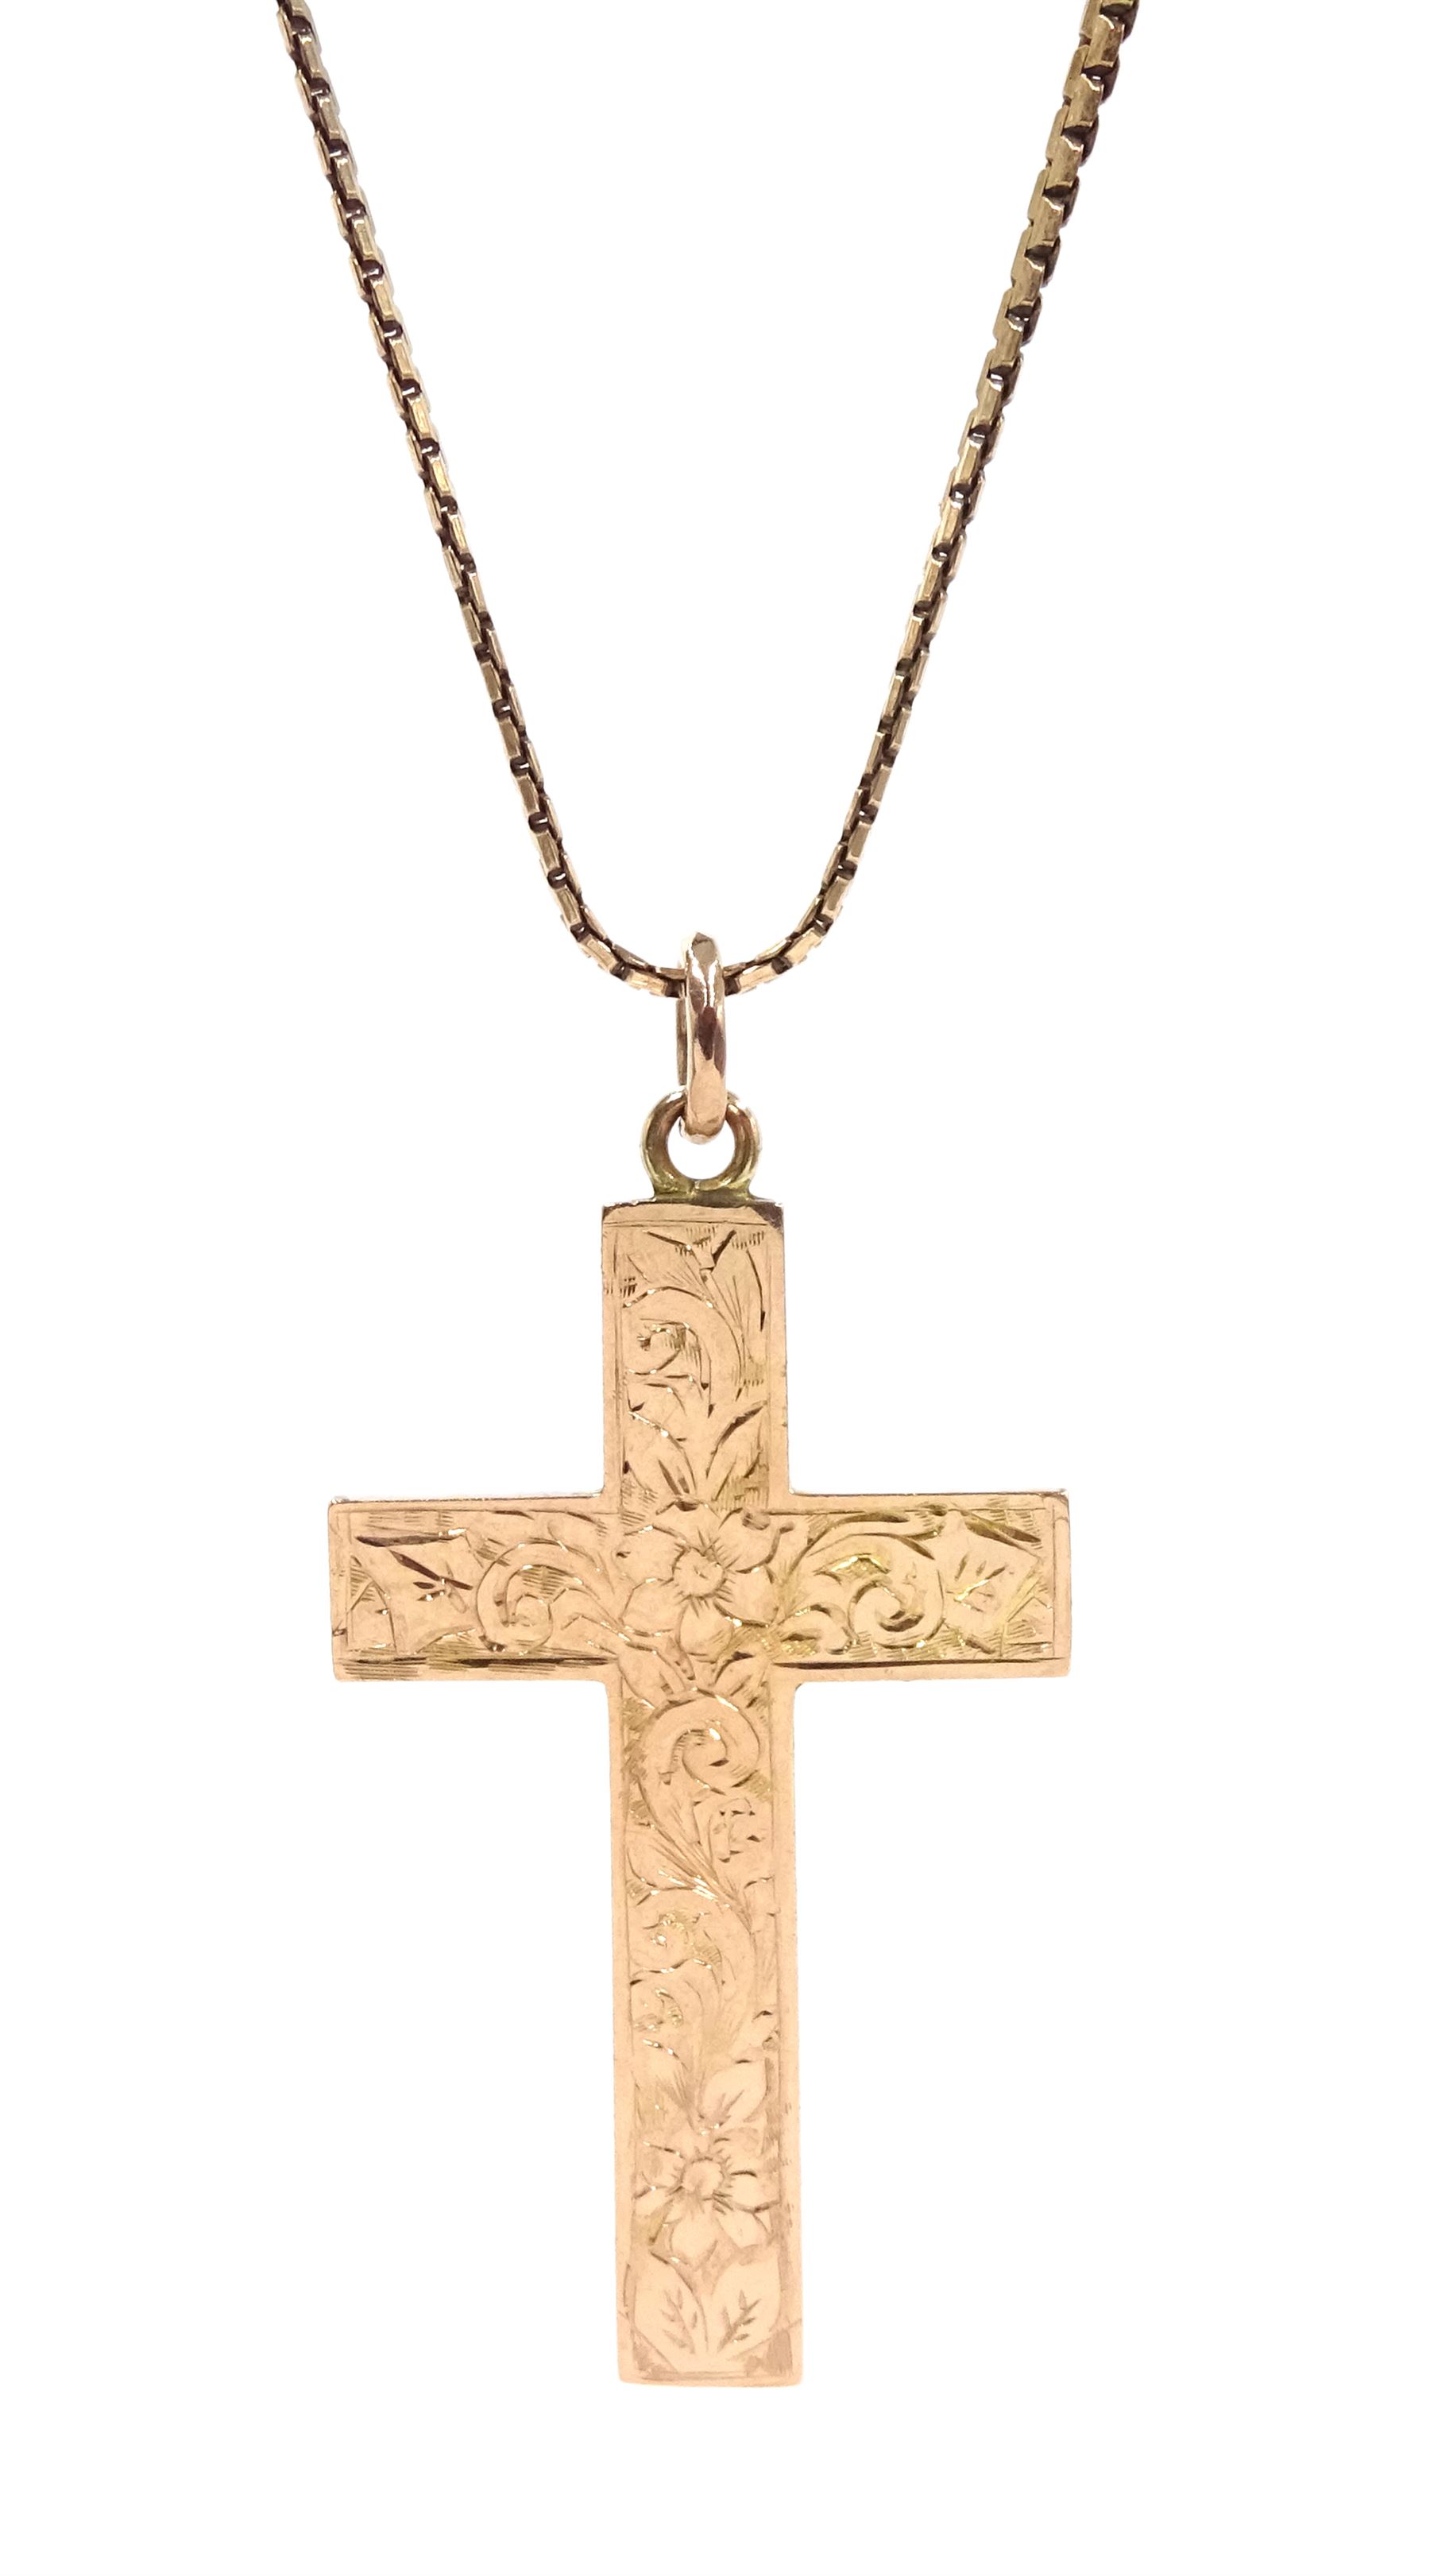 Early 20th century rose gold cross pendant